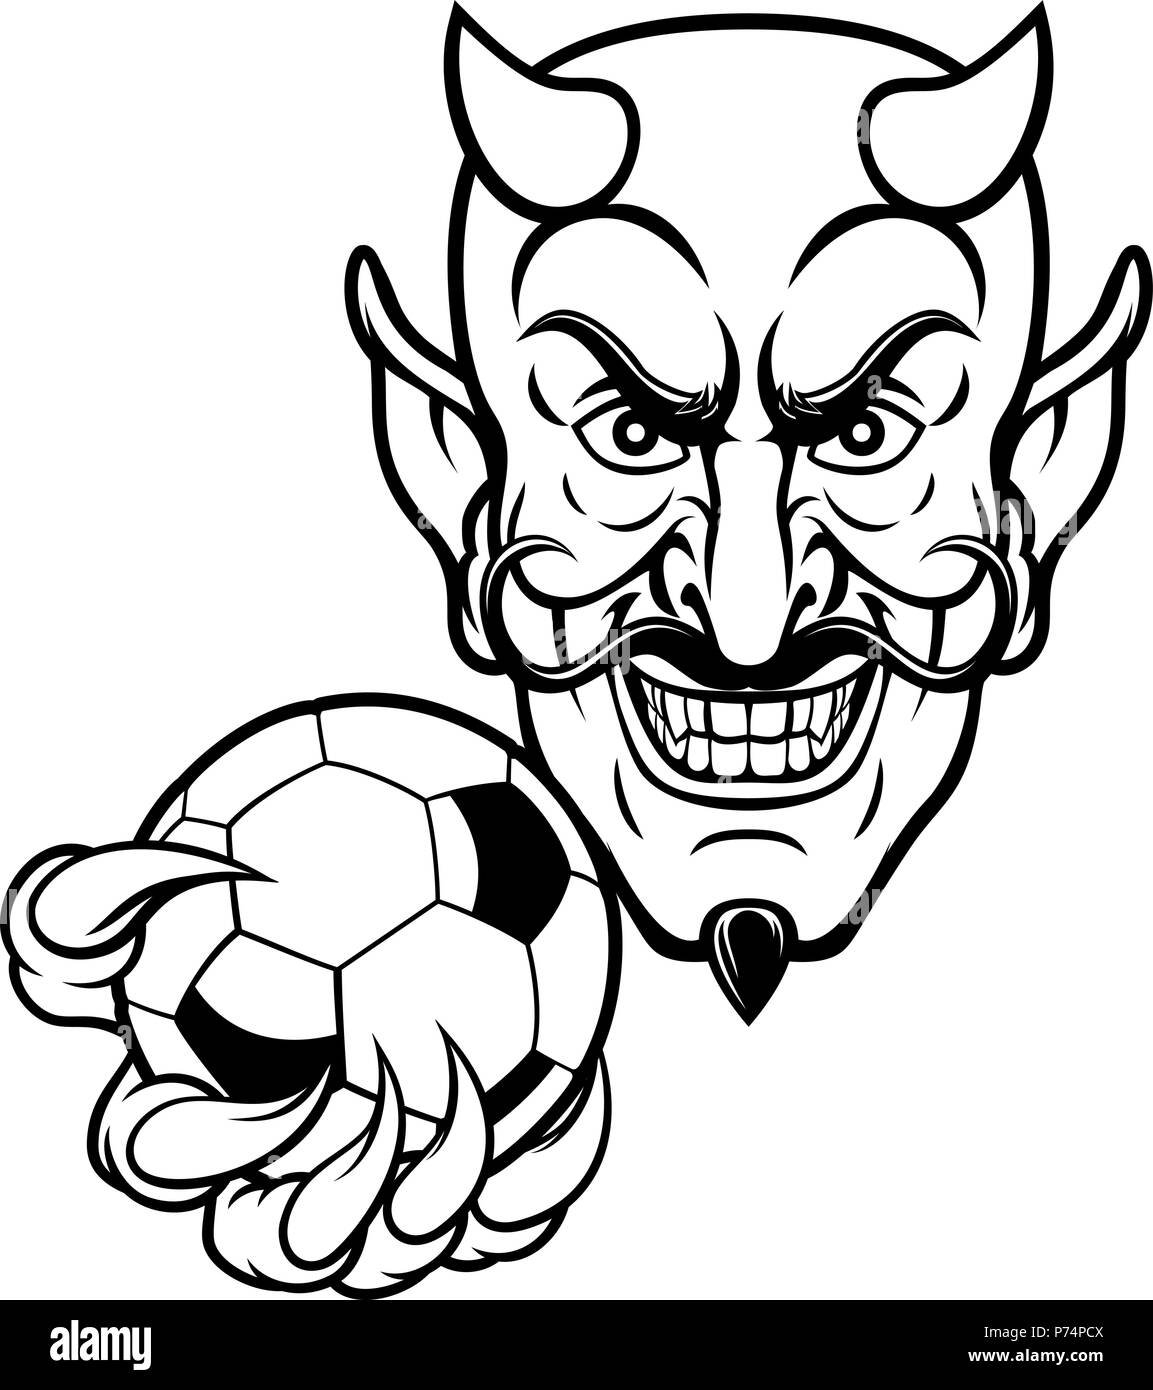 Football Soccer diable Mascot Illustration de Vecteur